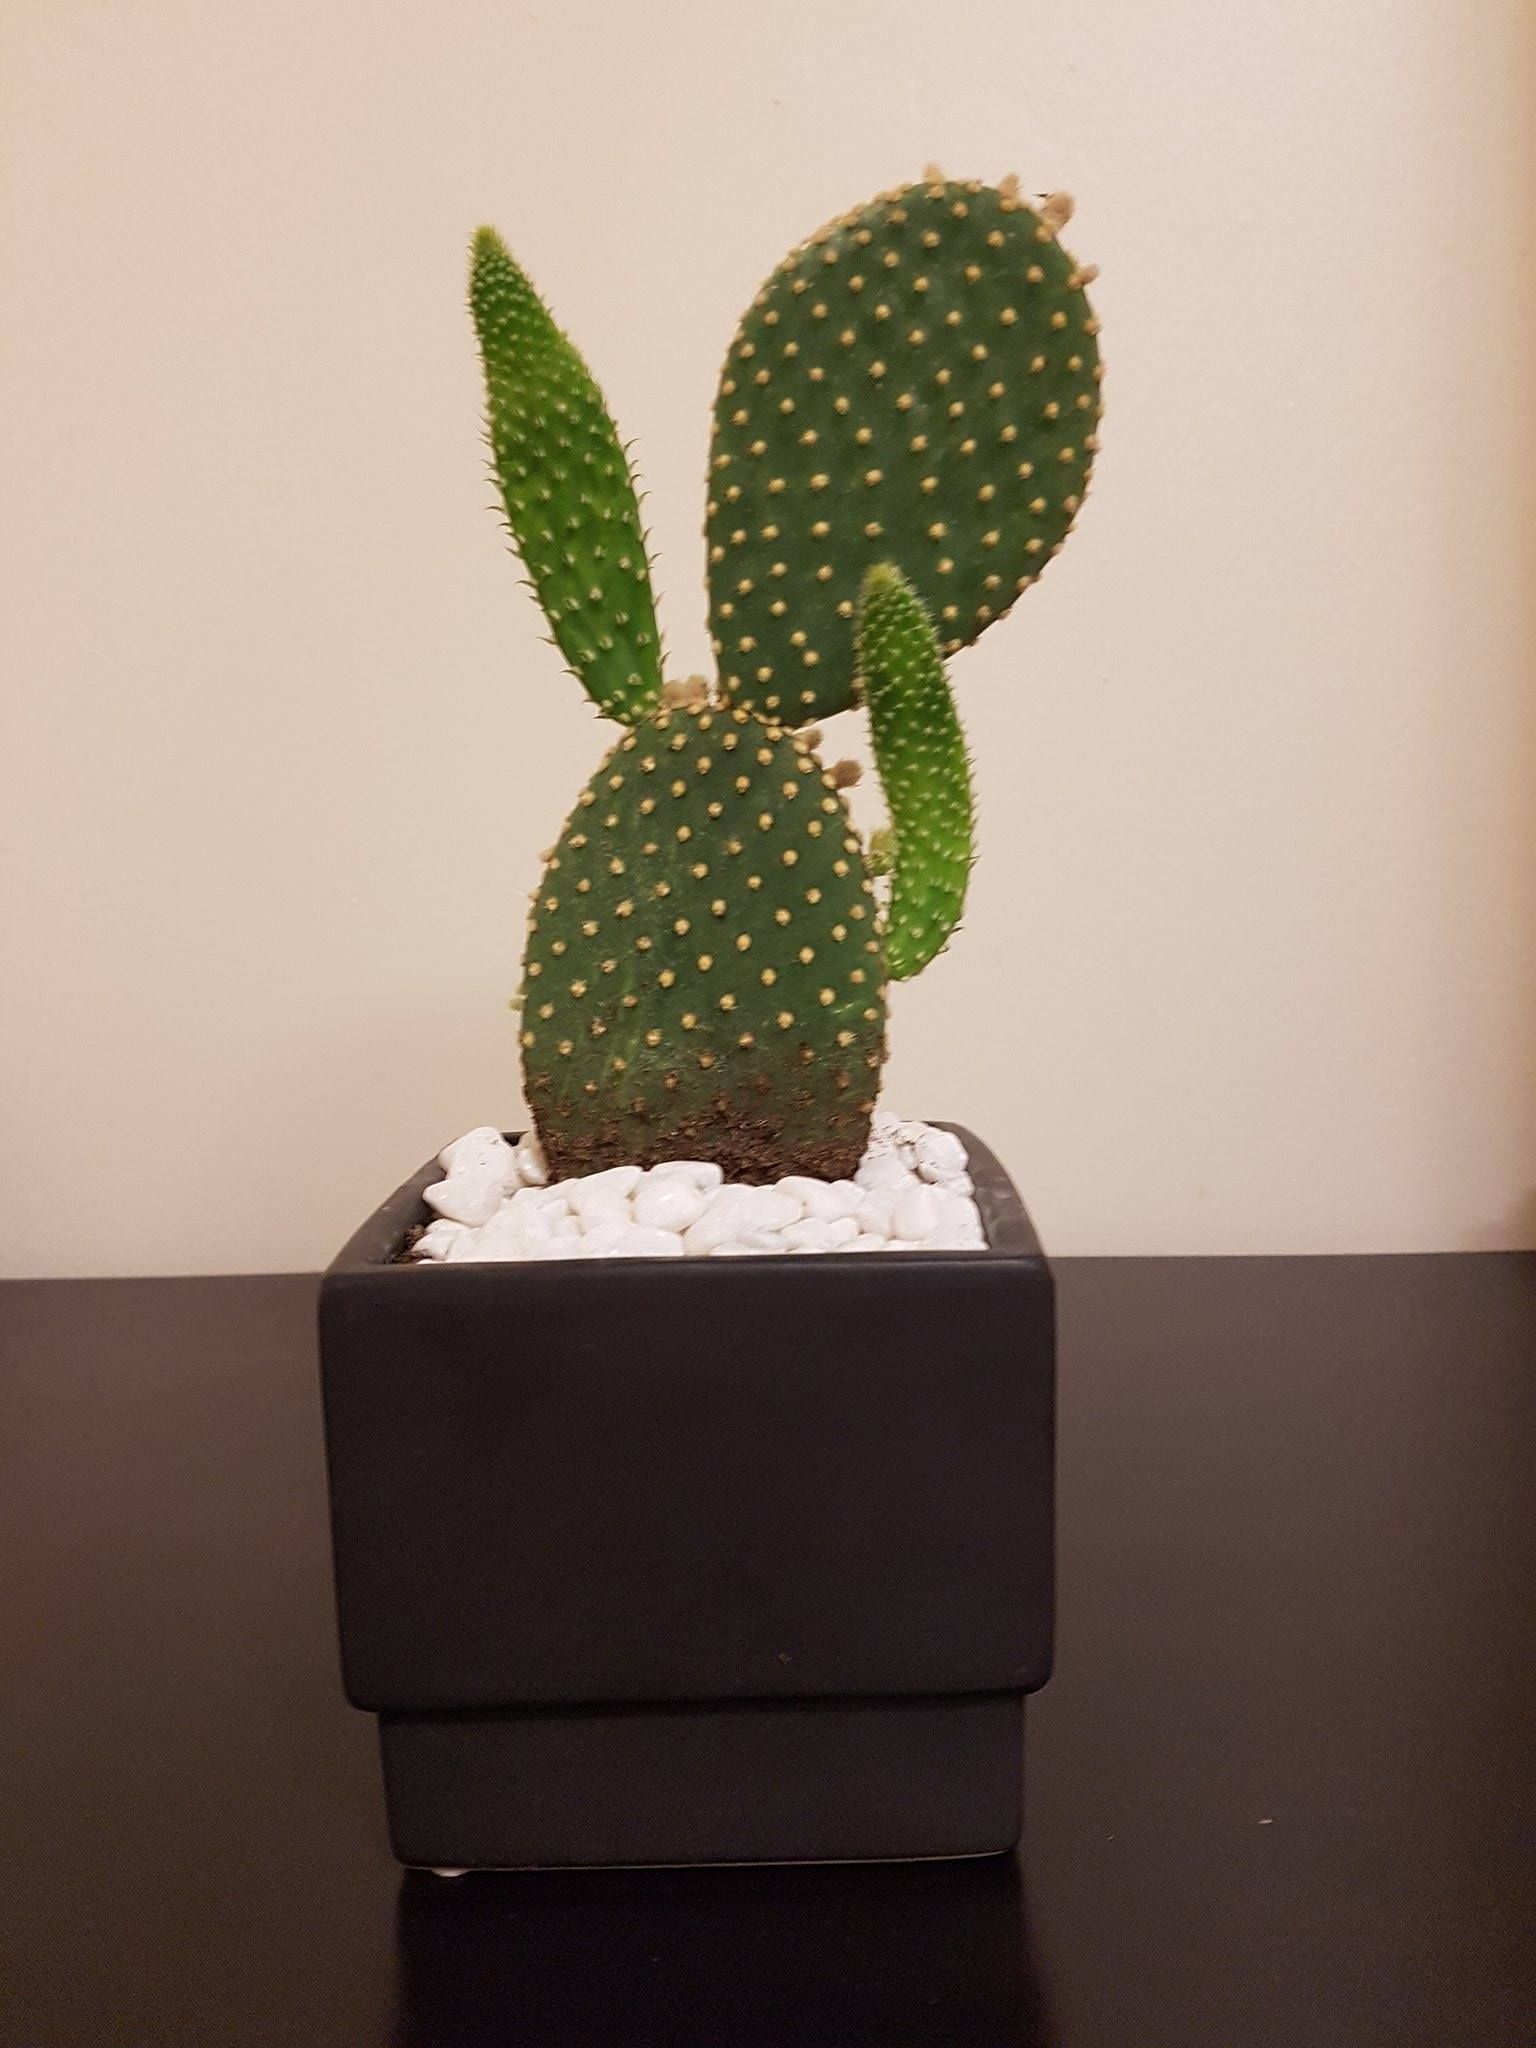 My cactus dabbed